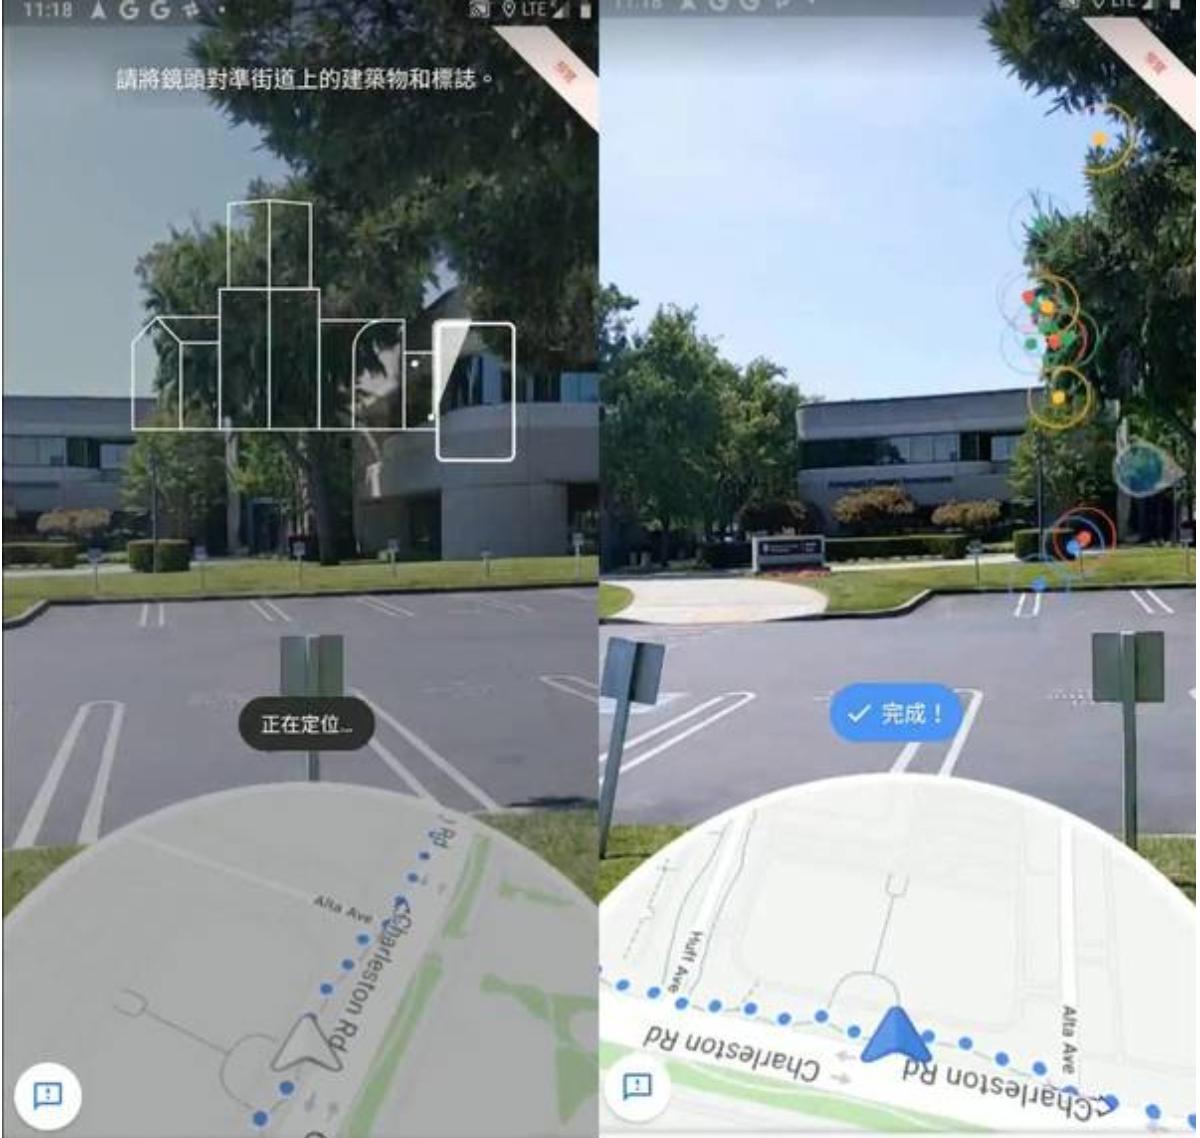 Google Maps Platform | Google Maps AR 導航功能